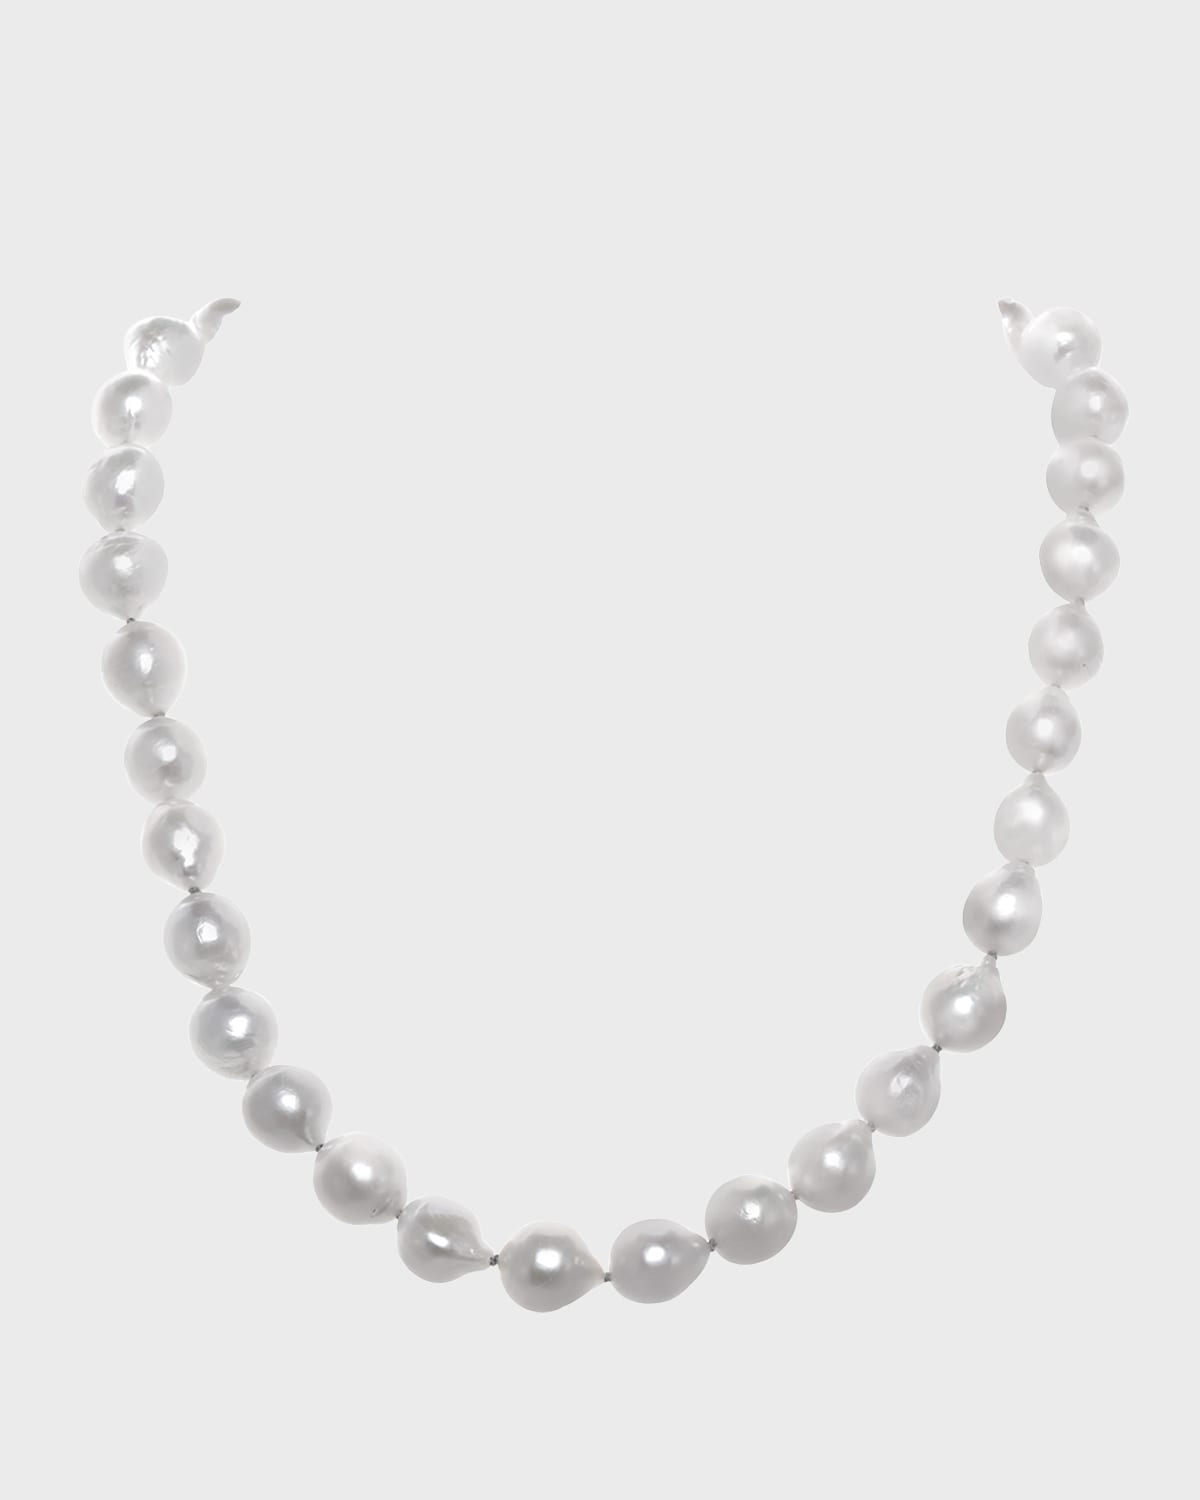 Small White Baroque Pearl Necklace, 10-12mm, 18"L